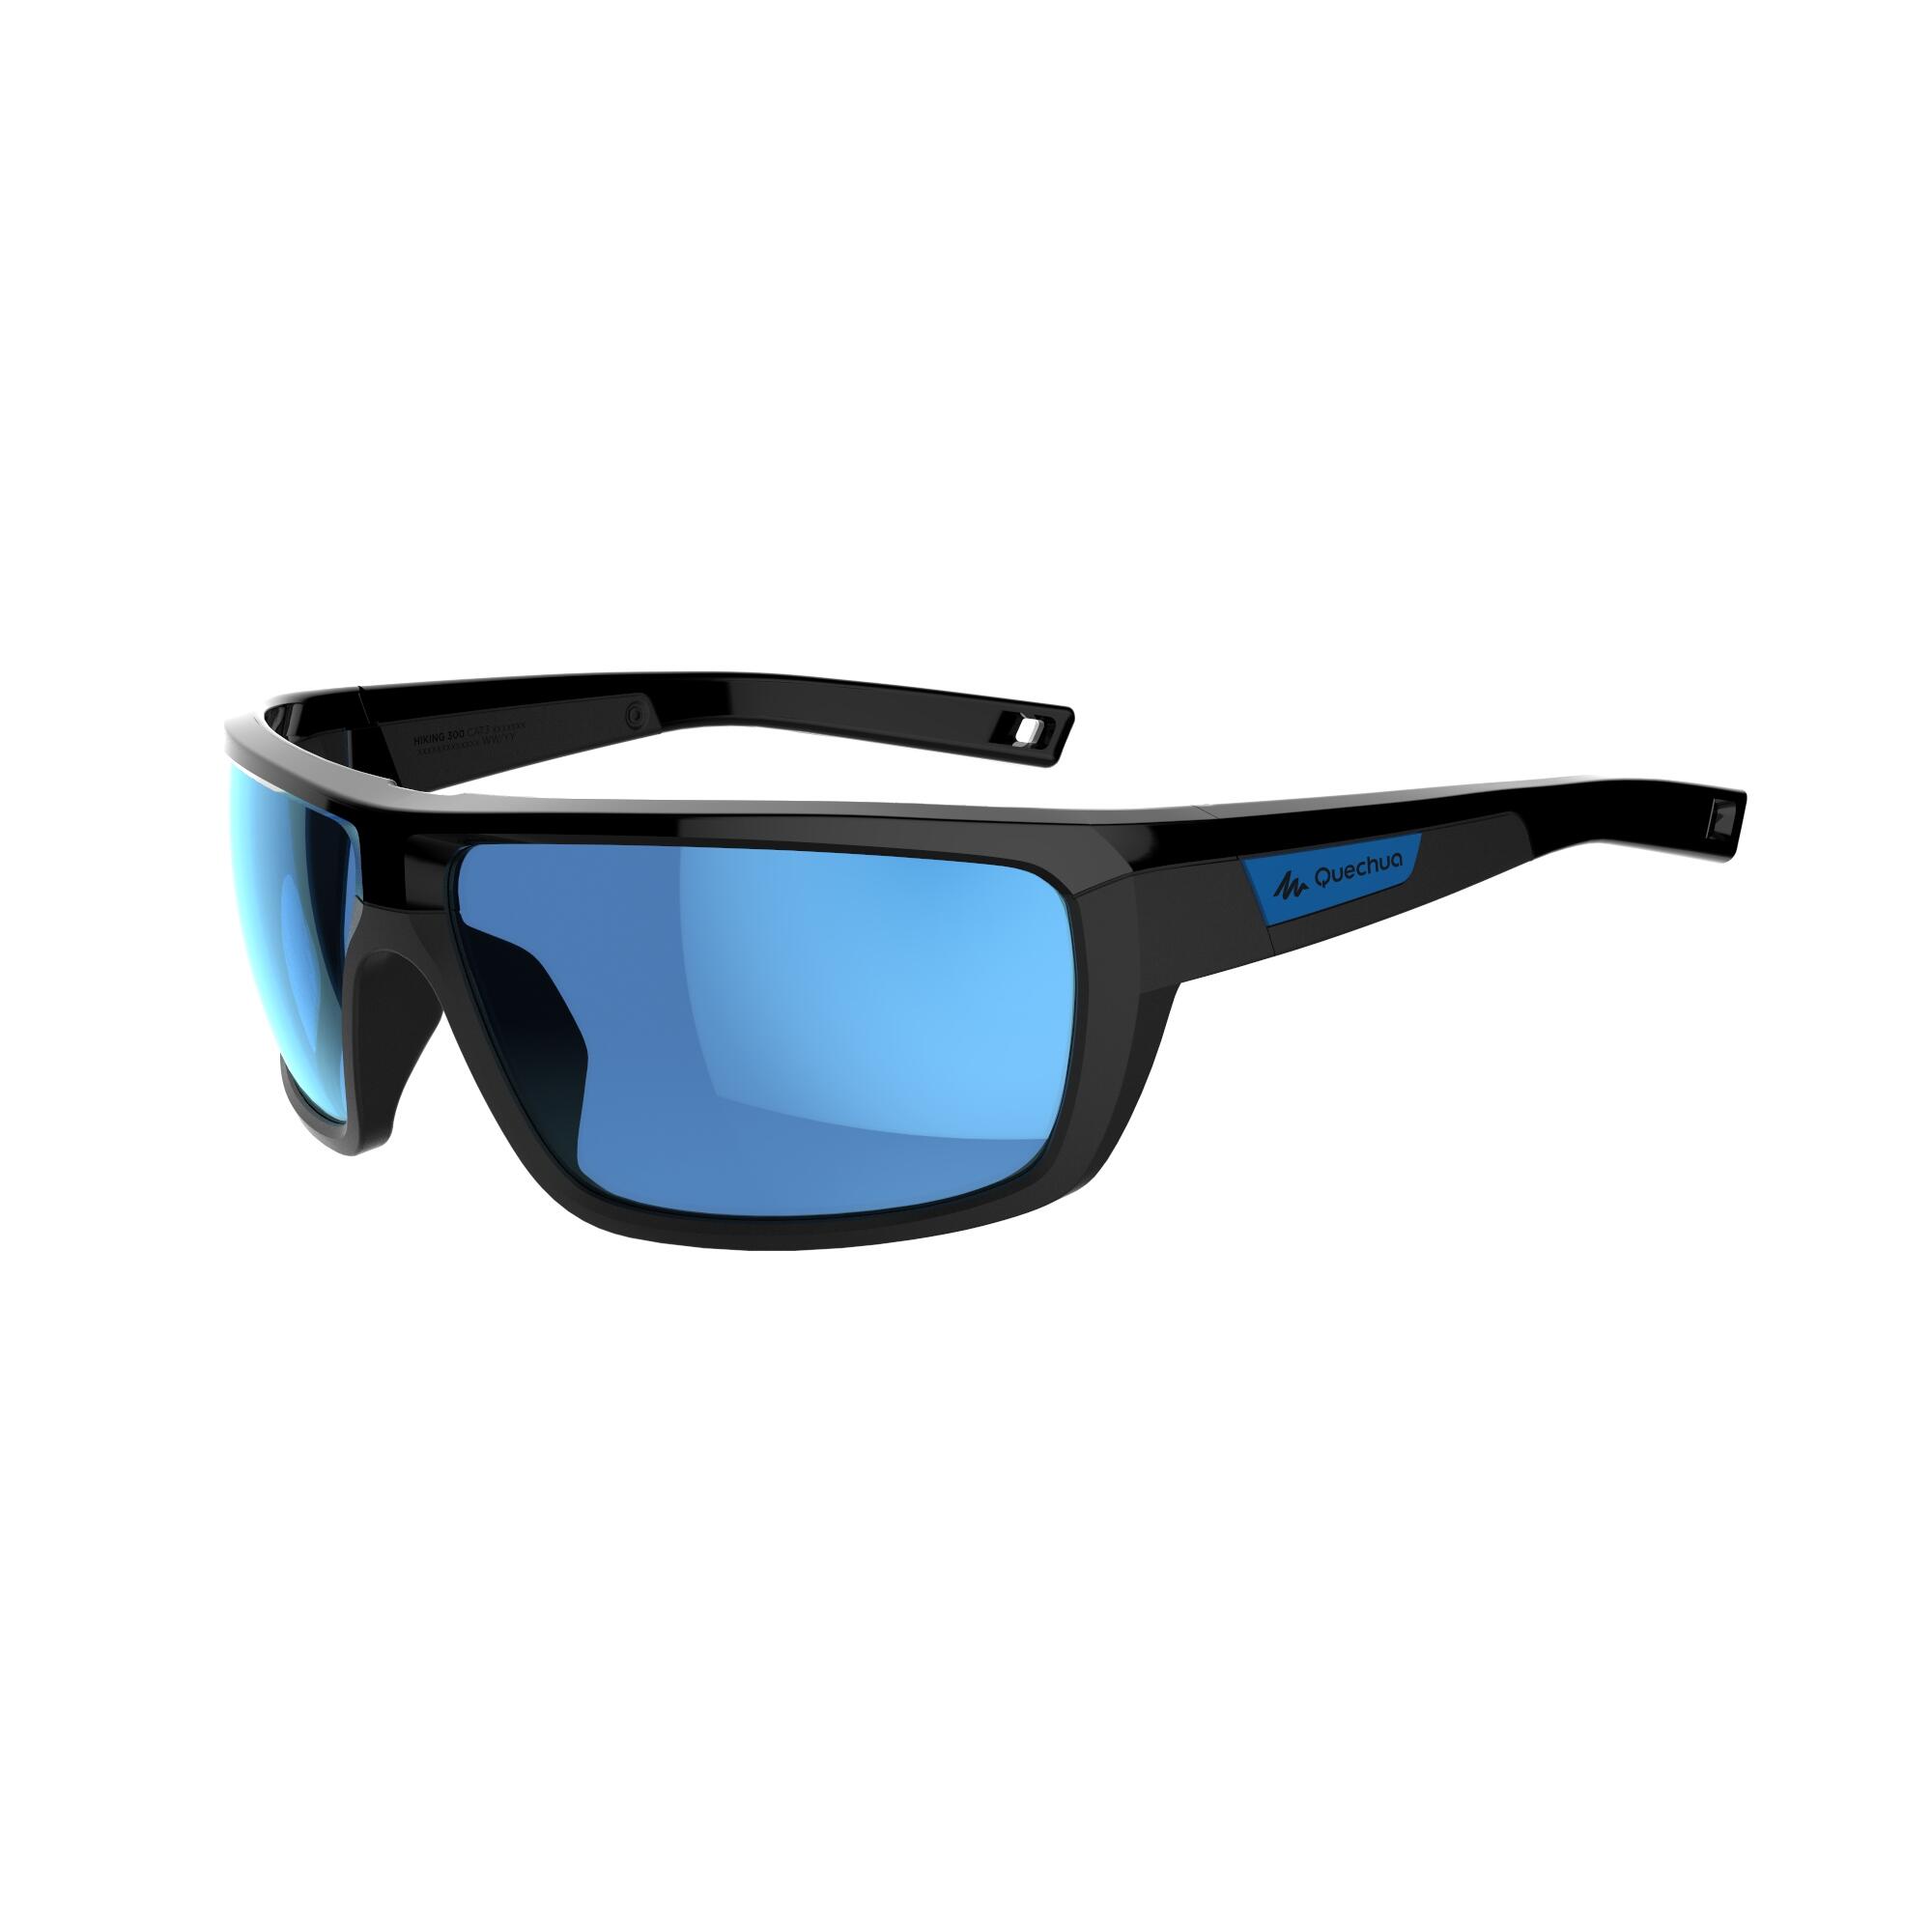 Adult hiking sunglasses – MH530 